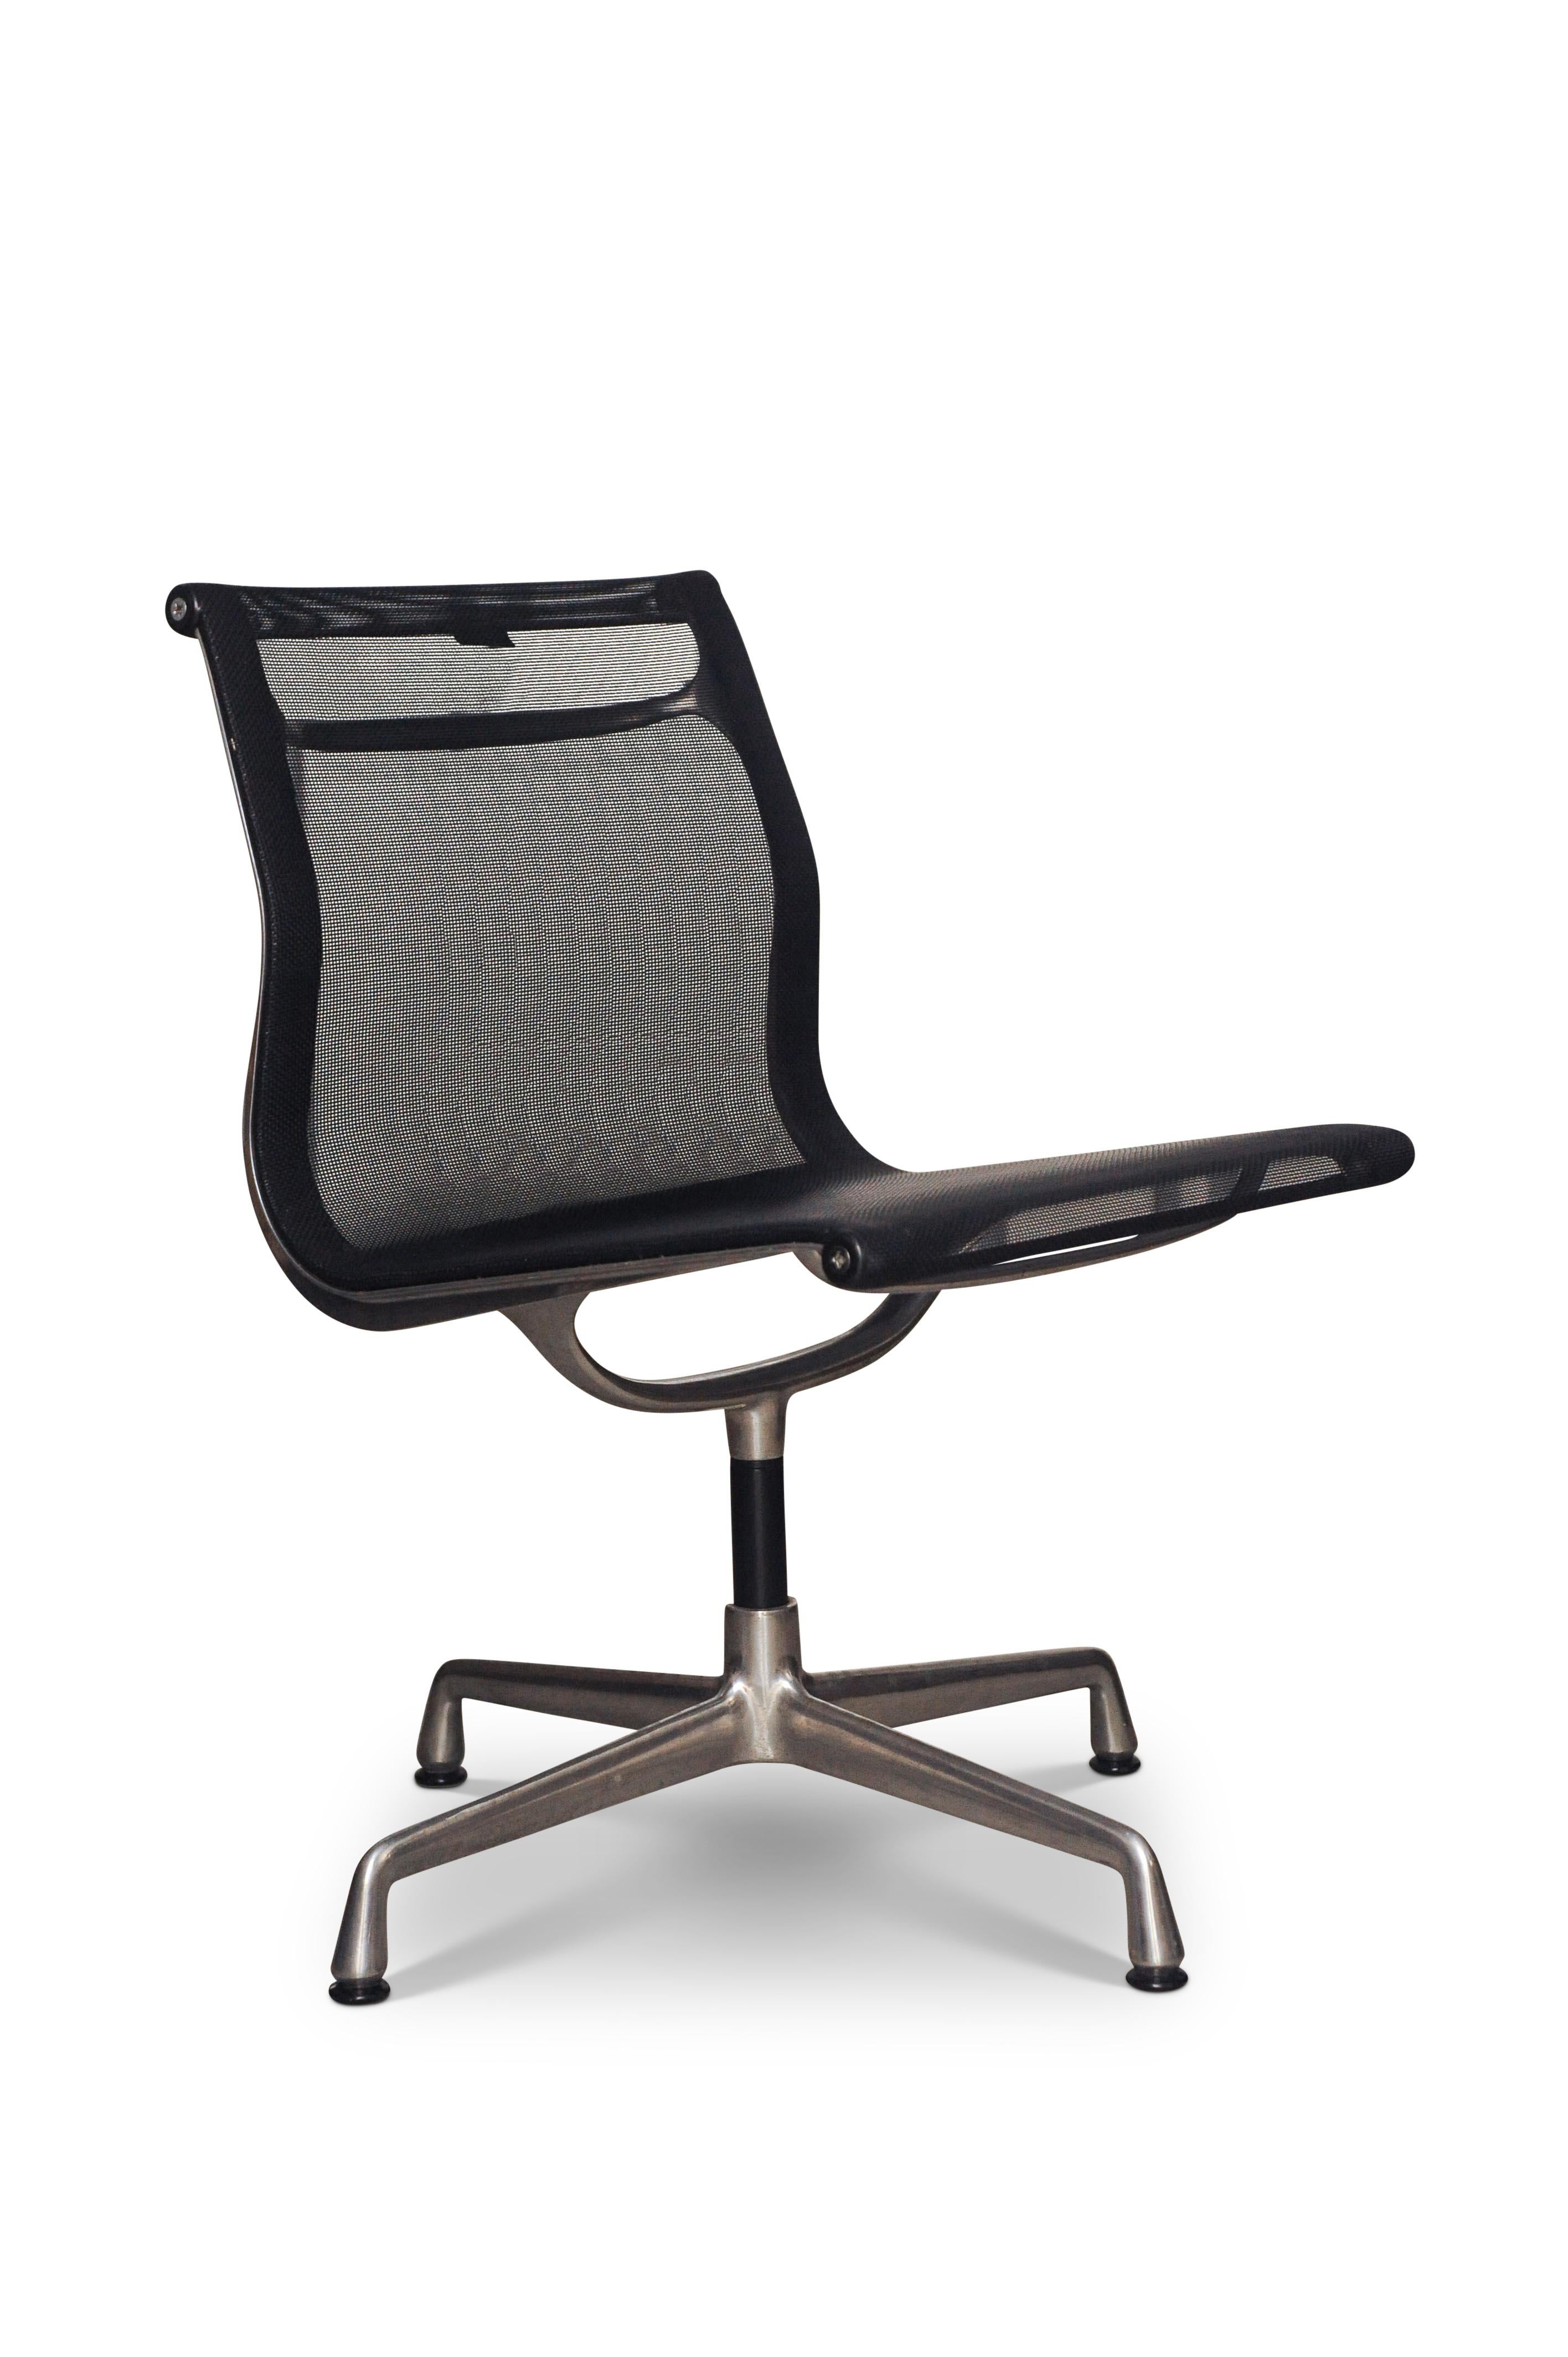 Charles Eames for Vitra an aluminium framed EA107 black net weave office swivel chair on a 4 prong base originally designed in 1958.